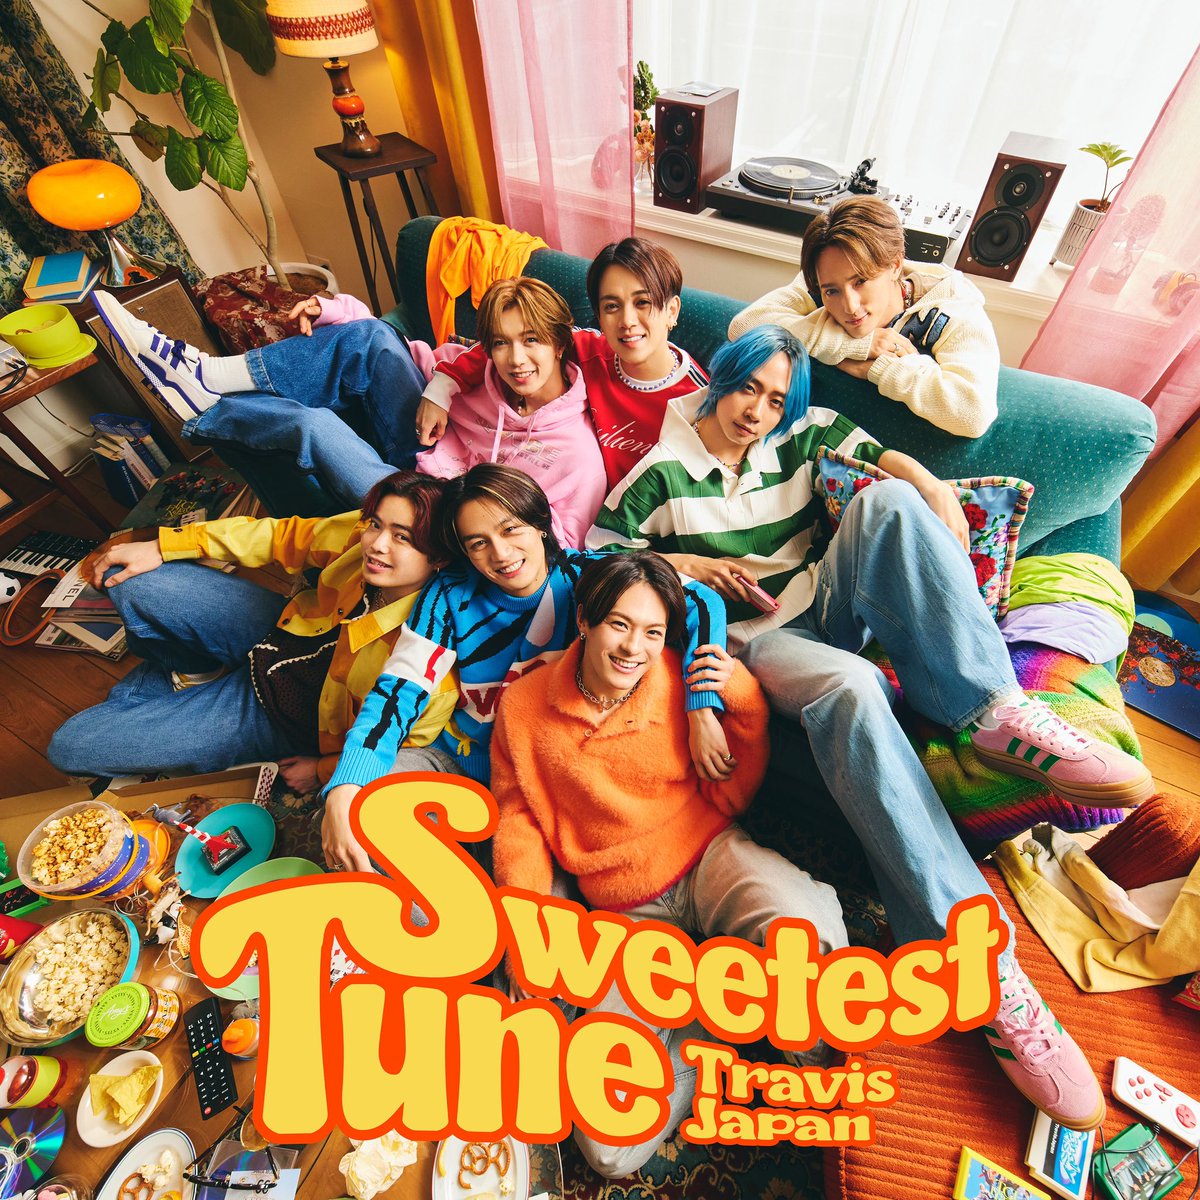 #TravisJapan 5th Single「Sweetest Tune」 2024.6.10(mon)Digital Release! Instagram &YouTube &TikTokで #SweetestTune の一部を先行配信🎧 bio.to/SweetestTune ※楽曲の反映に時間がかかる場合がございます 楽曲を使った投稿お待ちしております🐝~ #SweetestTune #トラジャ